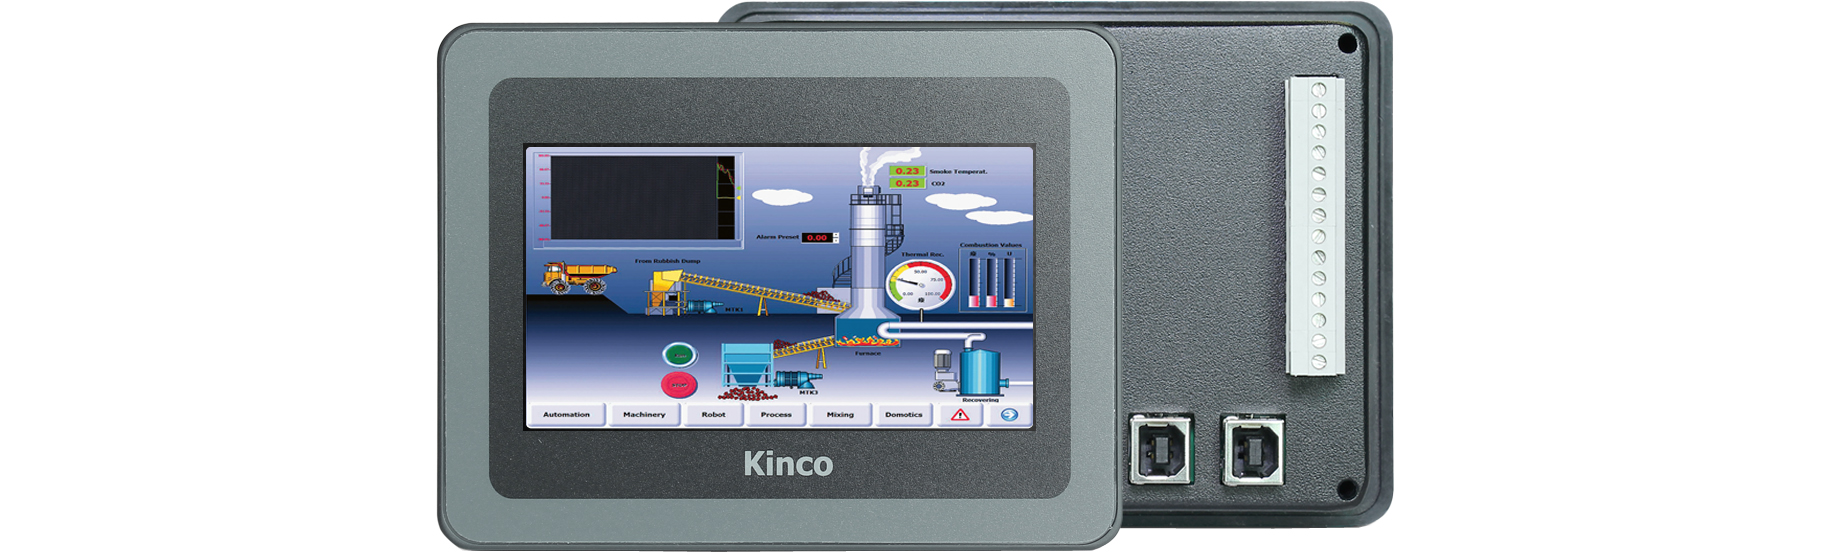 Kinco HMI and PLC Combo Units